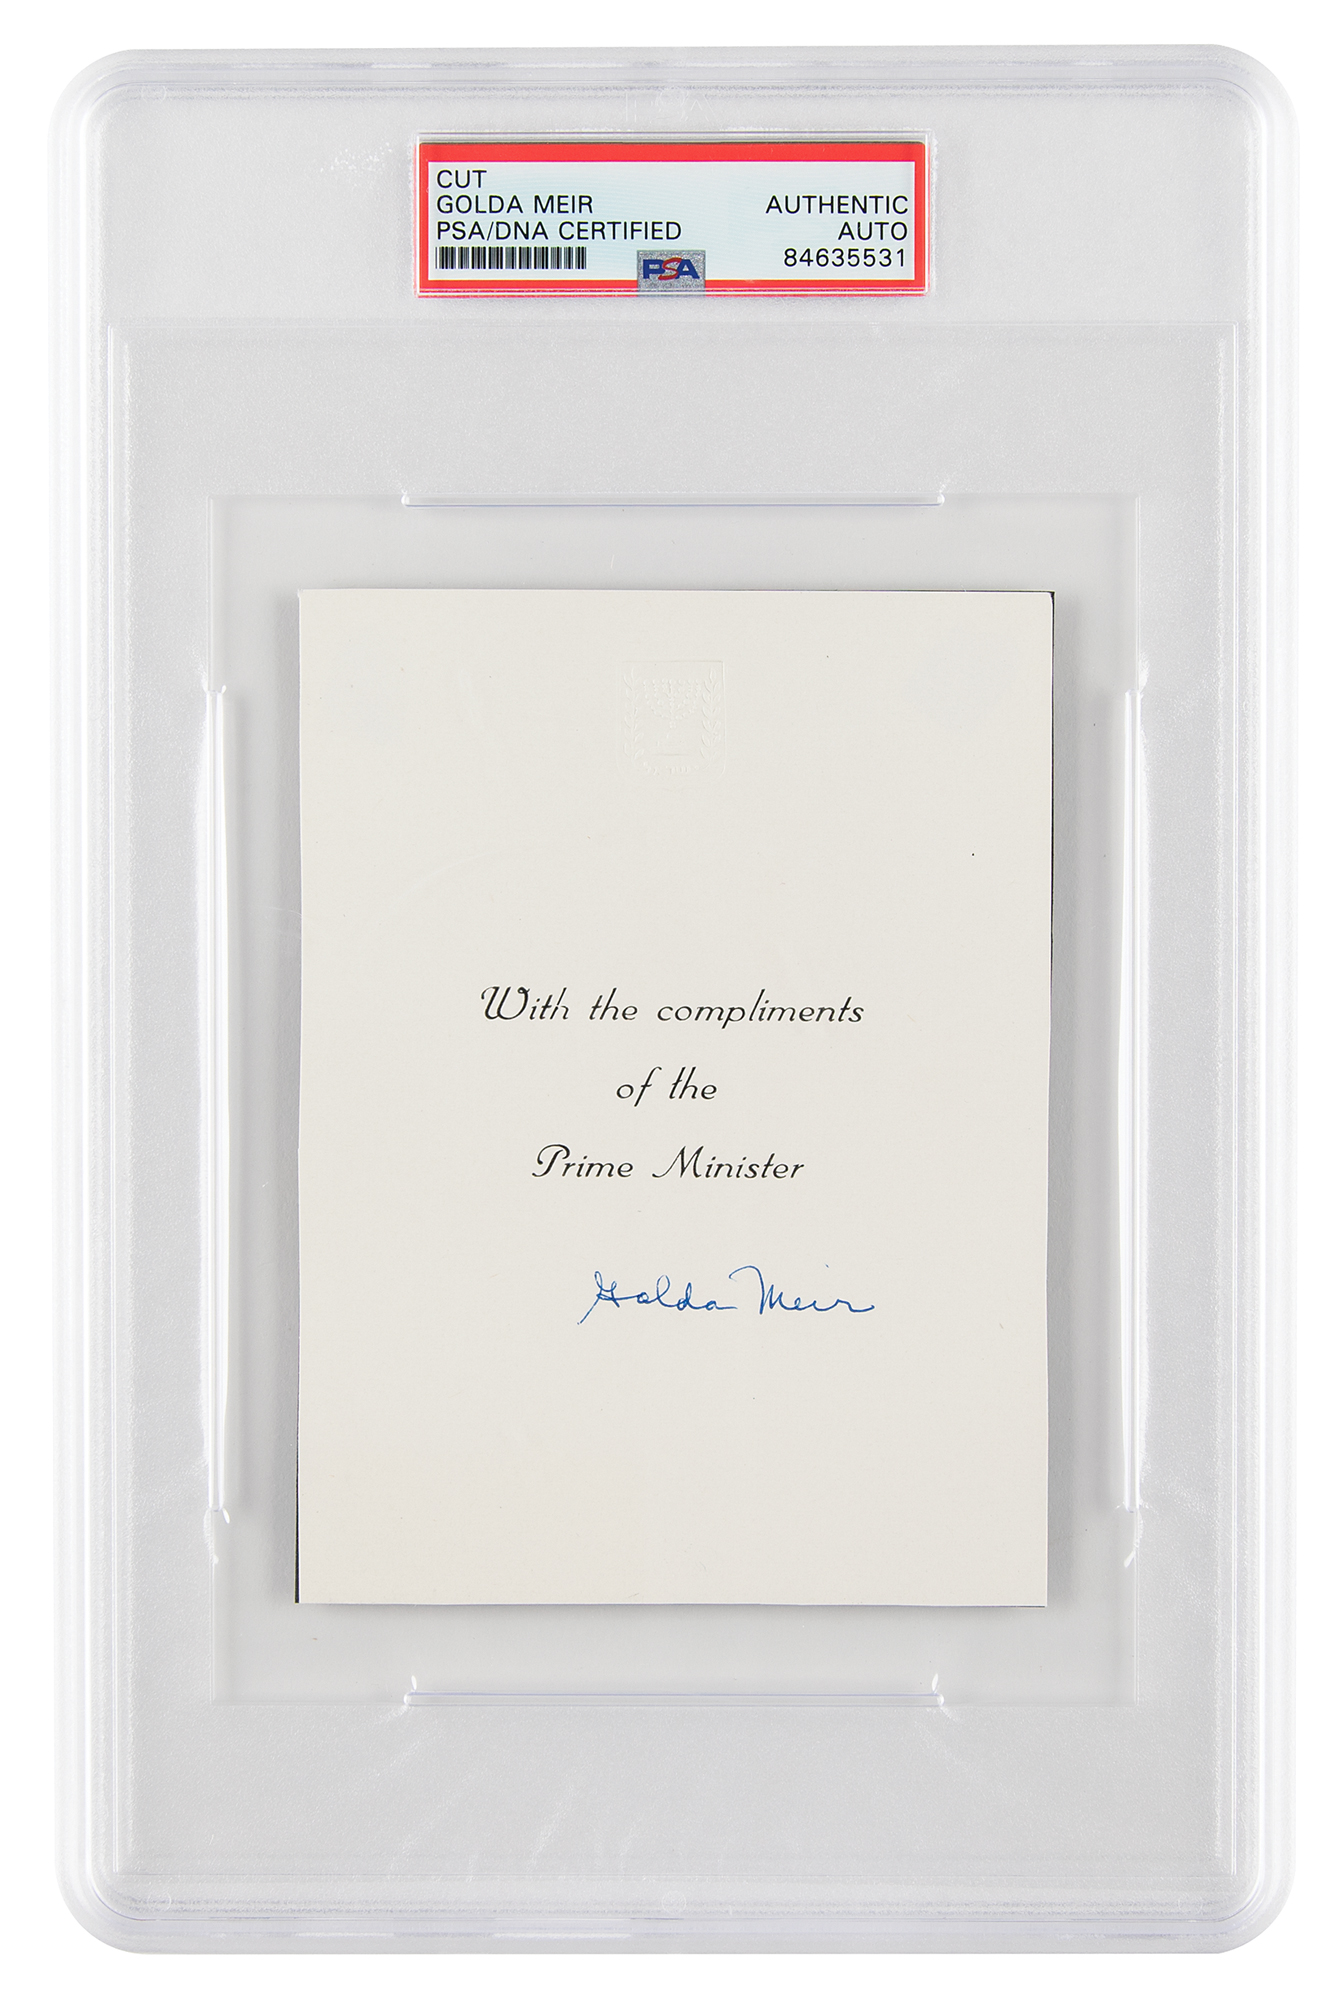 Lot #6236 Golda Meir Signed Compliments Card